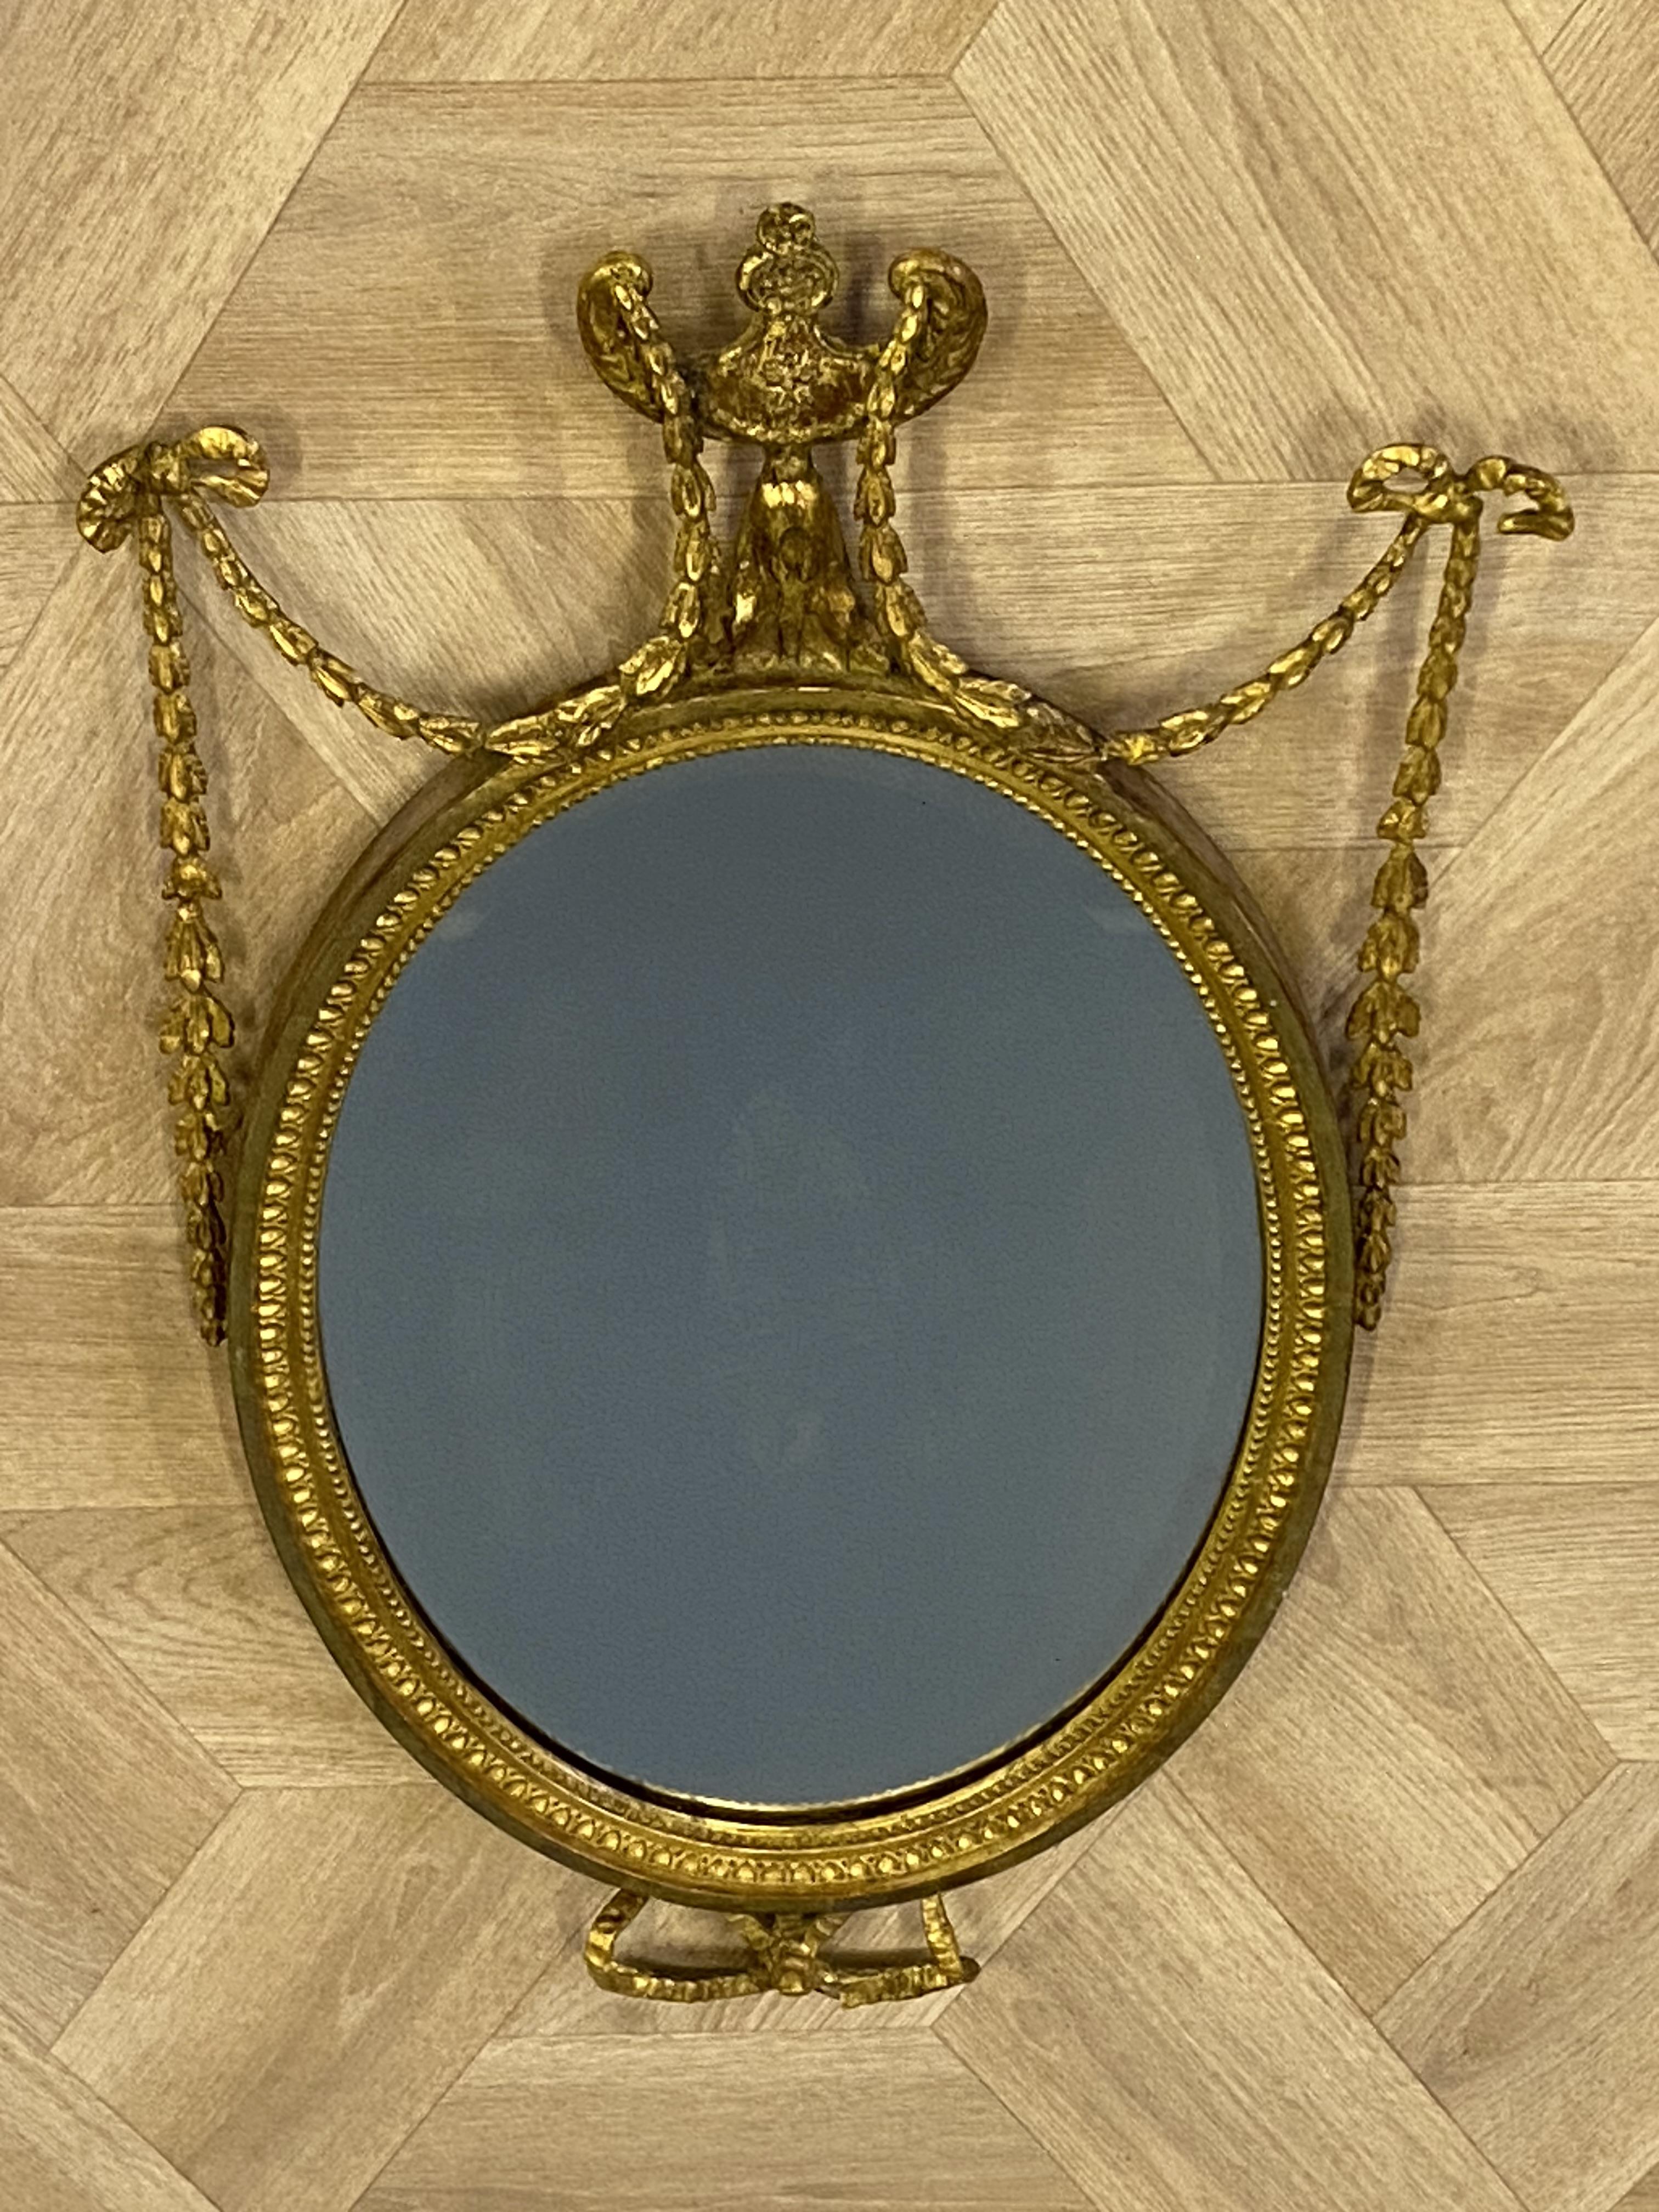 Antique oval Adam style mirror